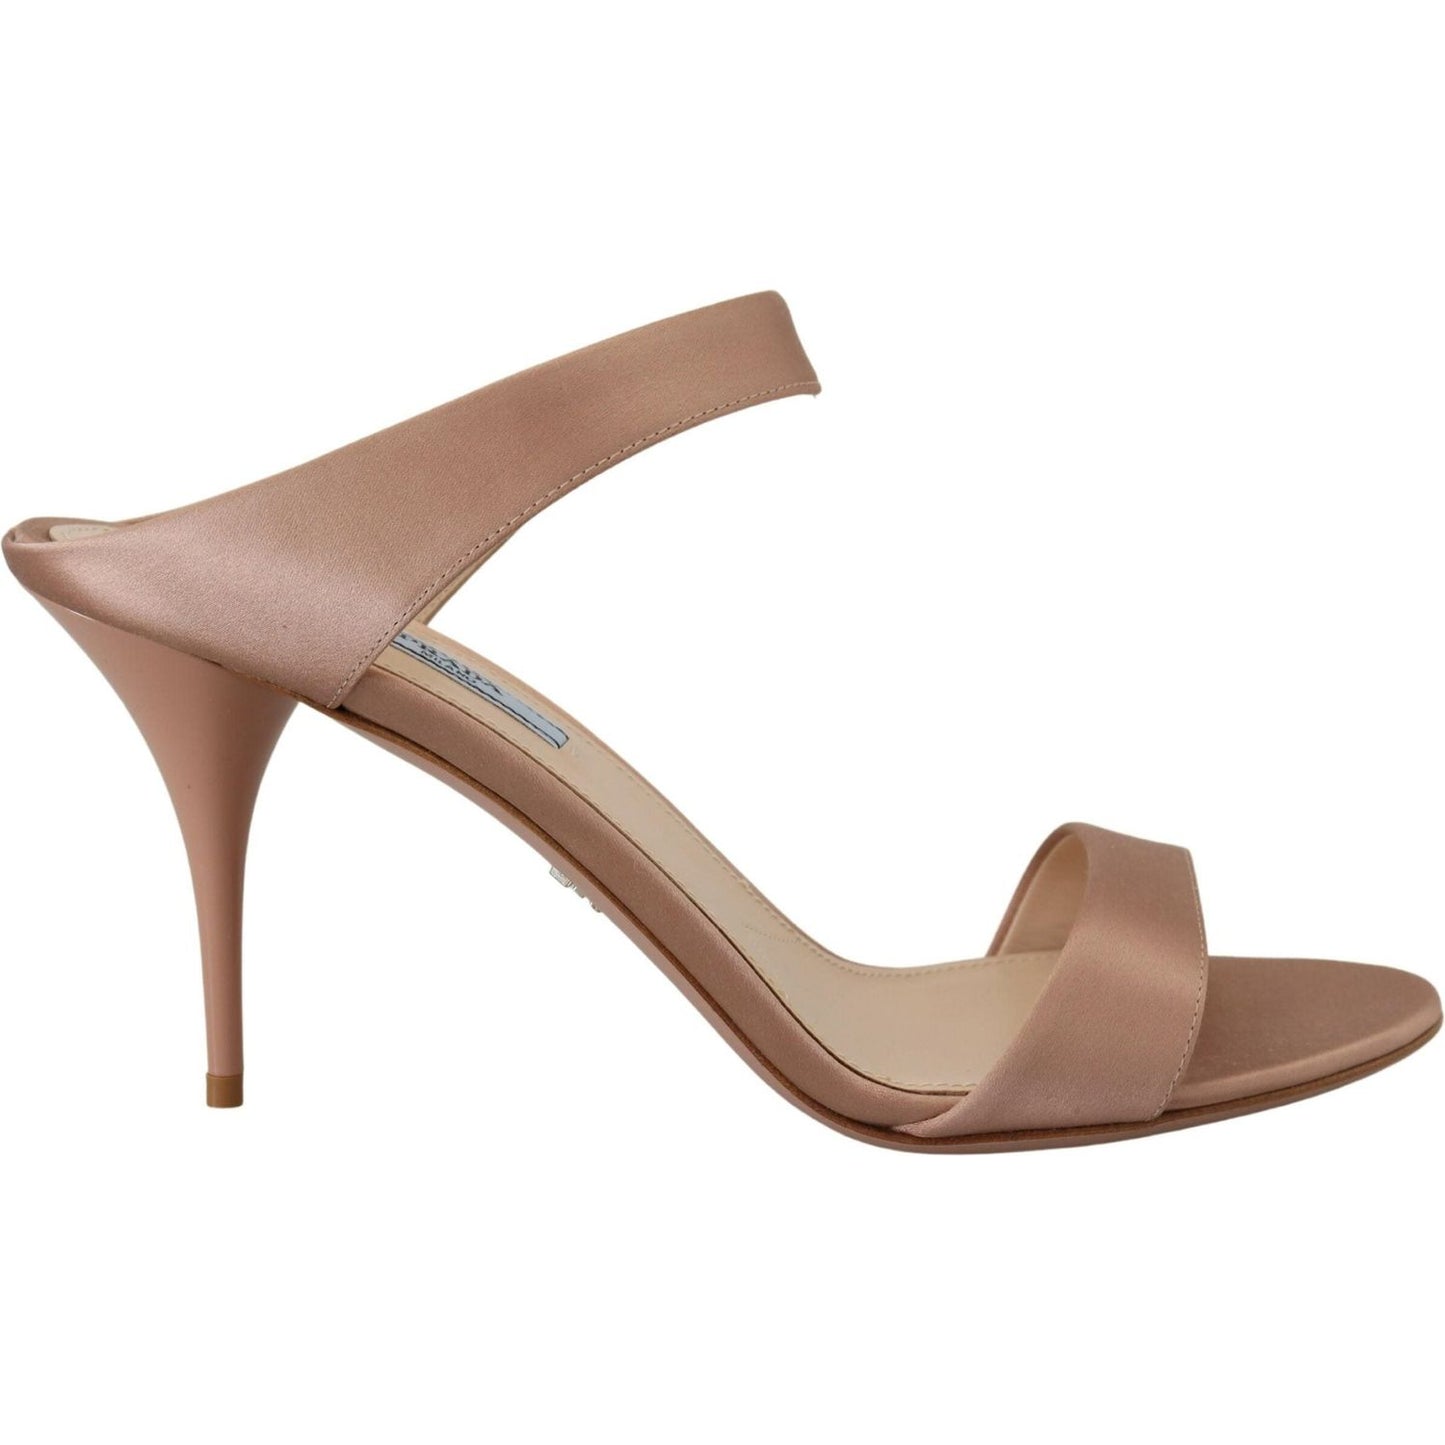 Prada Glimmering Rose Gold Leather Heels glimmering-rose-gold-leather-heels